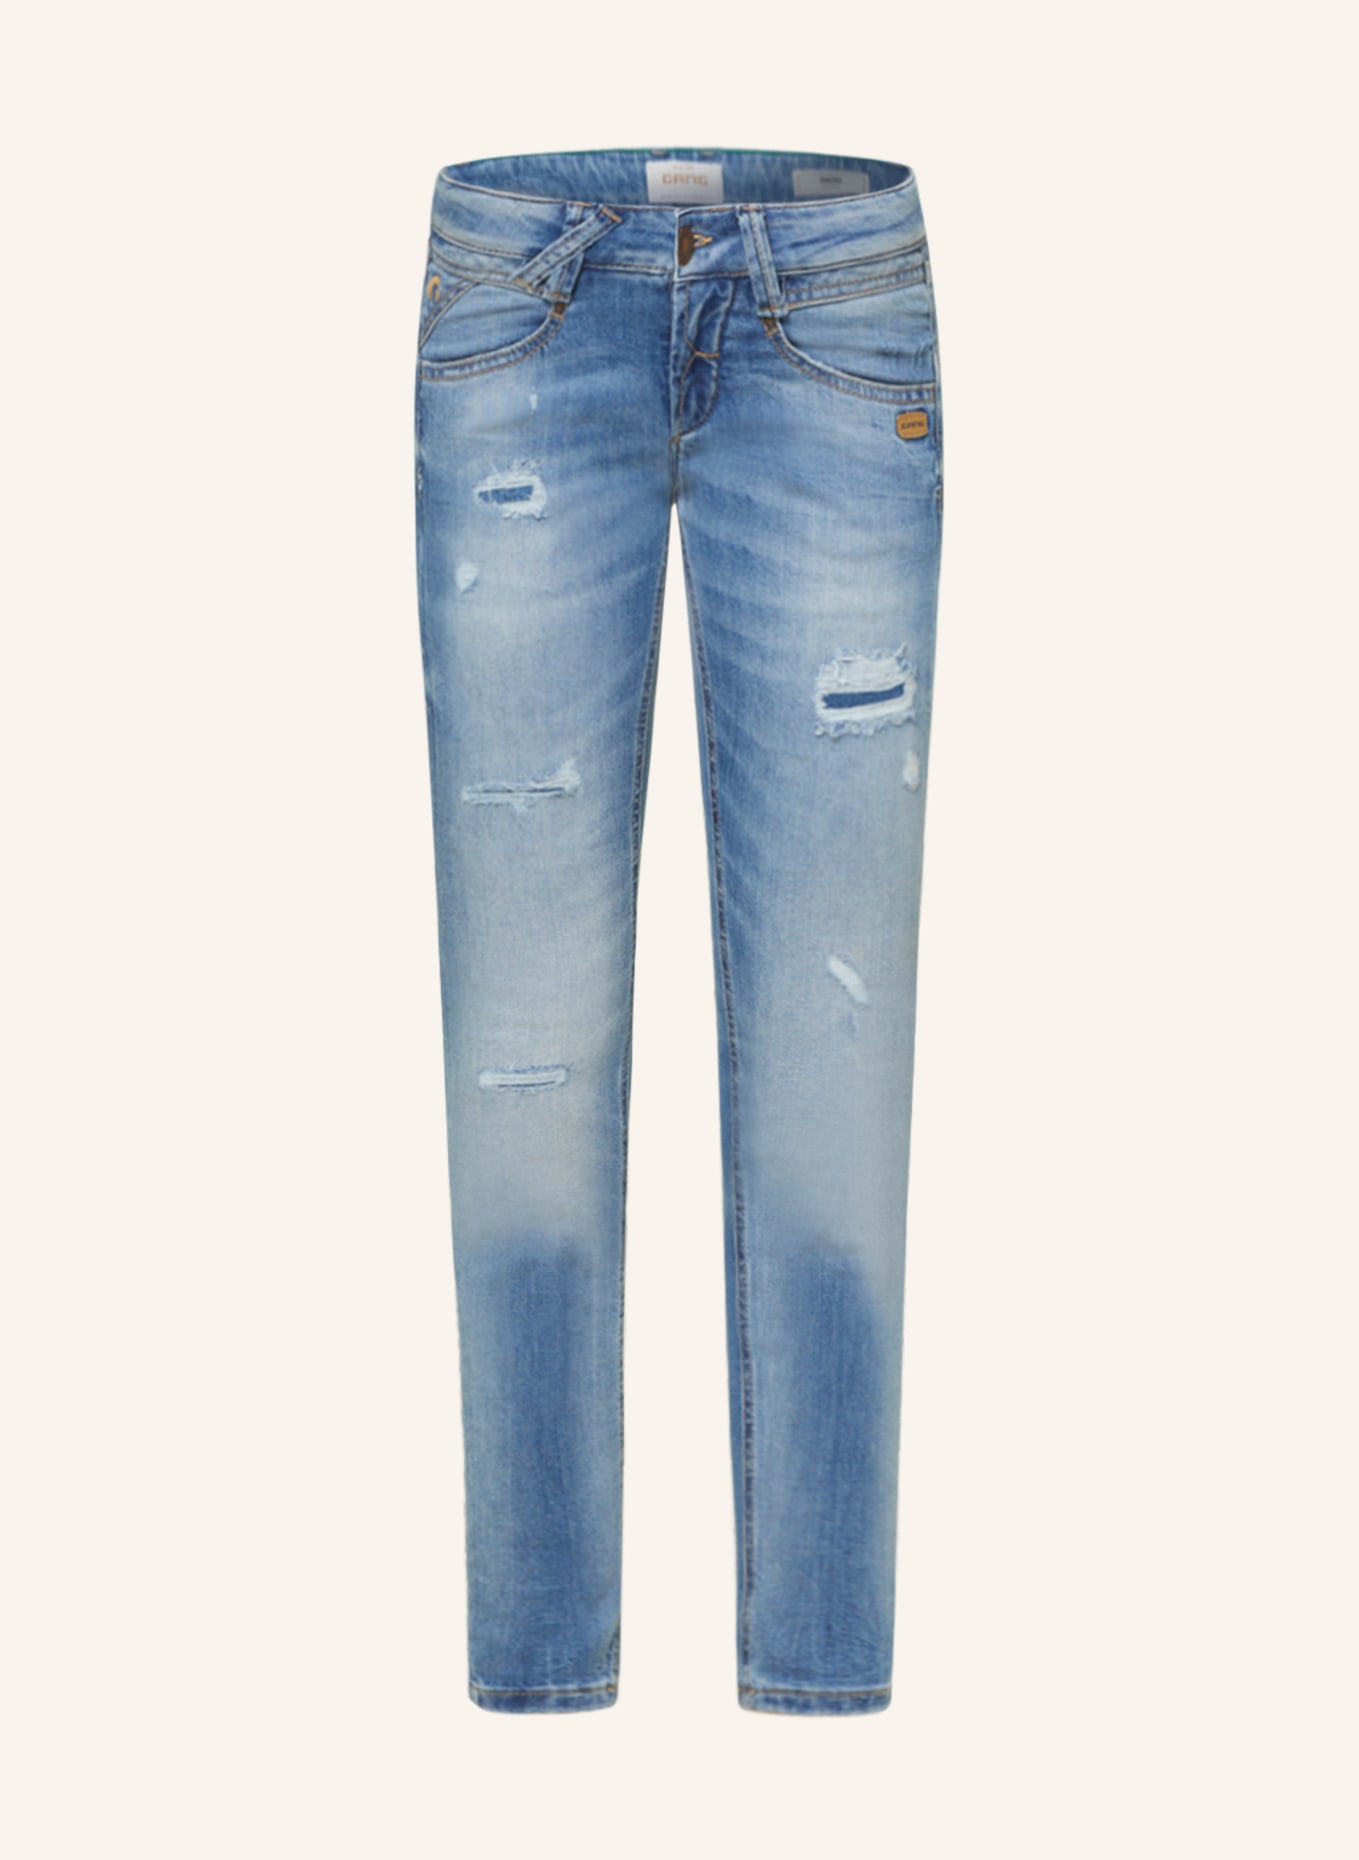 GANG Skinny Jeans NENA, Farbe: 7905 authentic Jeans (Bild 1)